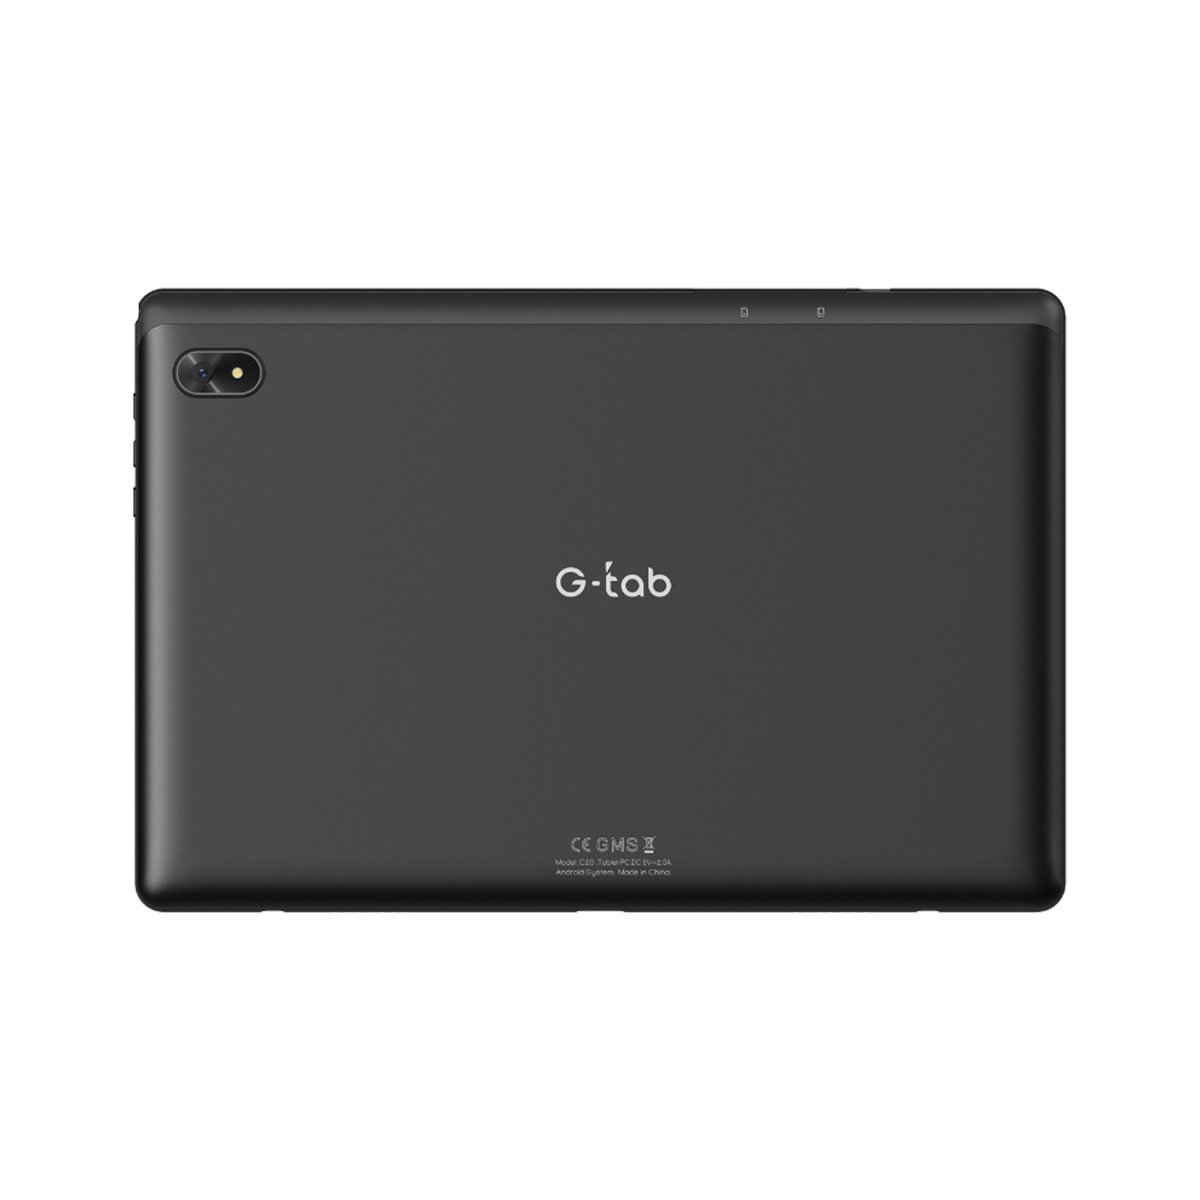 Gtab Tablet C20,2GB RAM,32GB Memory,4G+Wi-Fi,10.1" Display